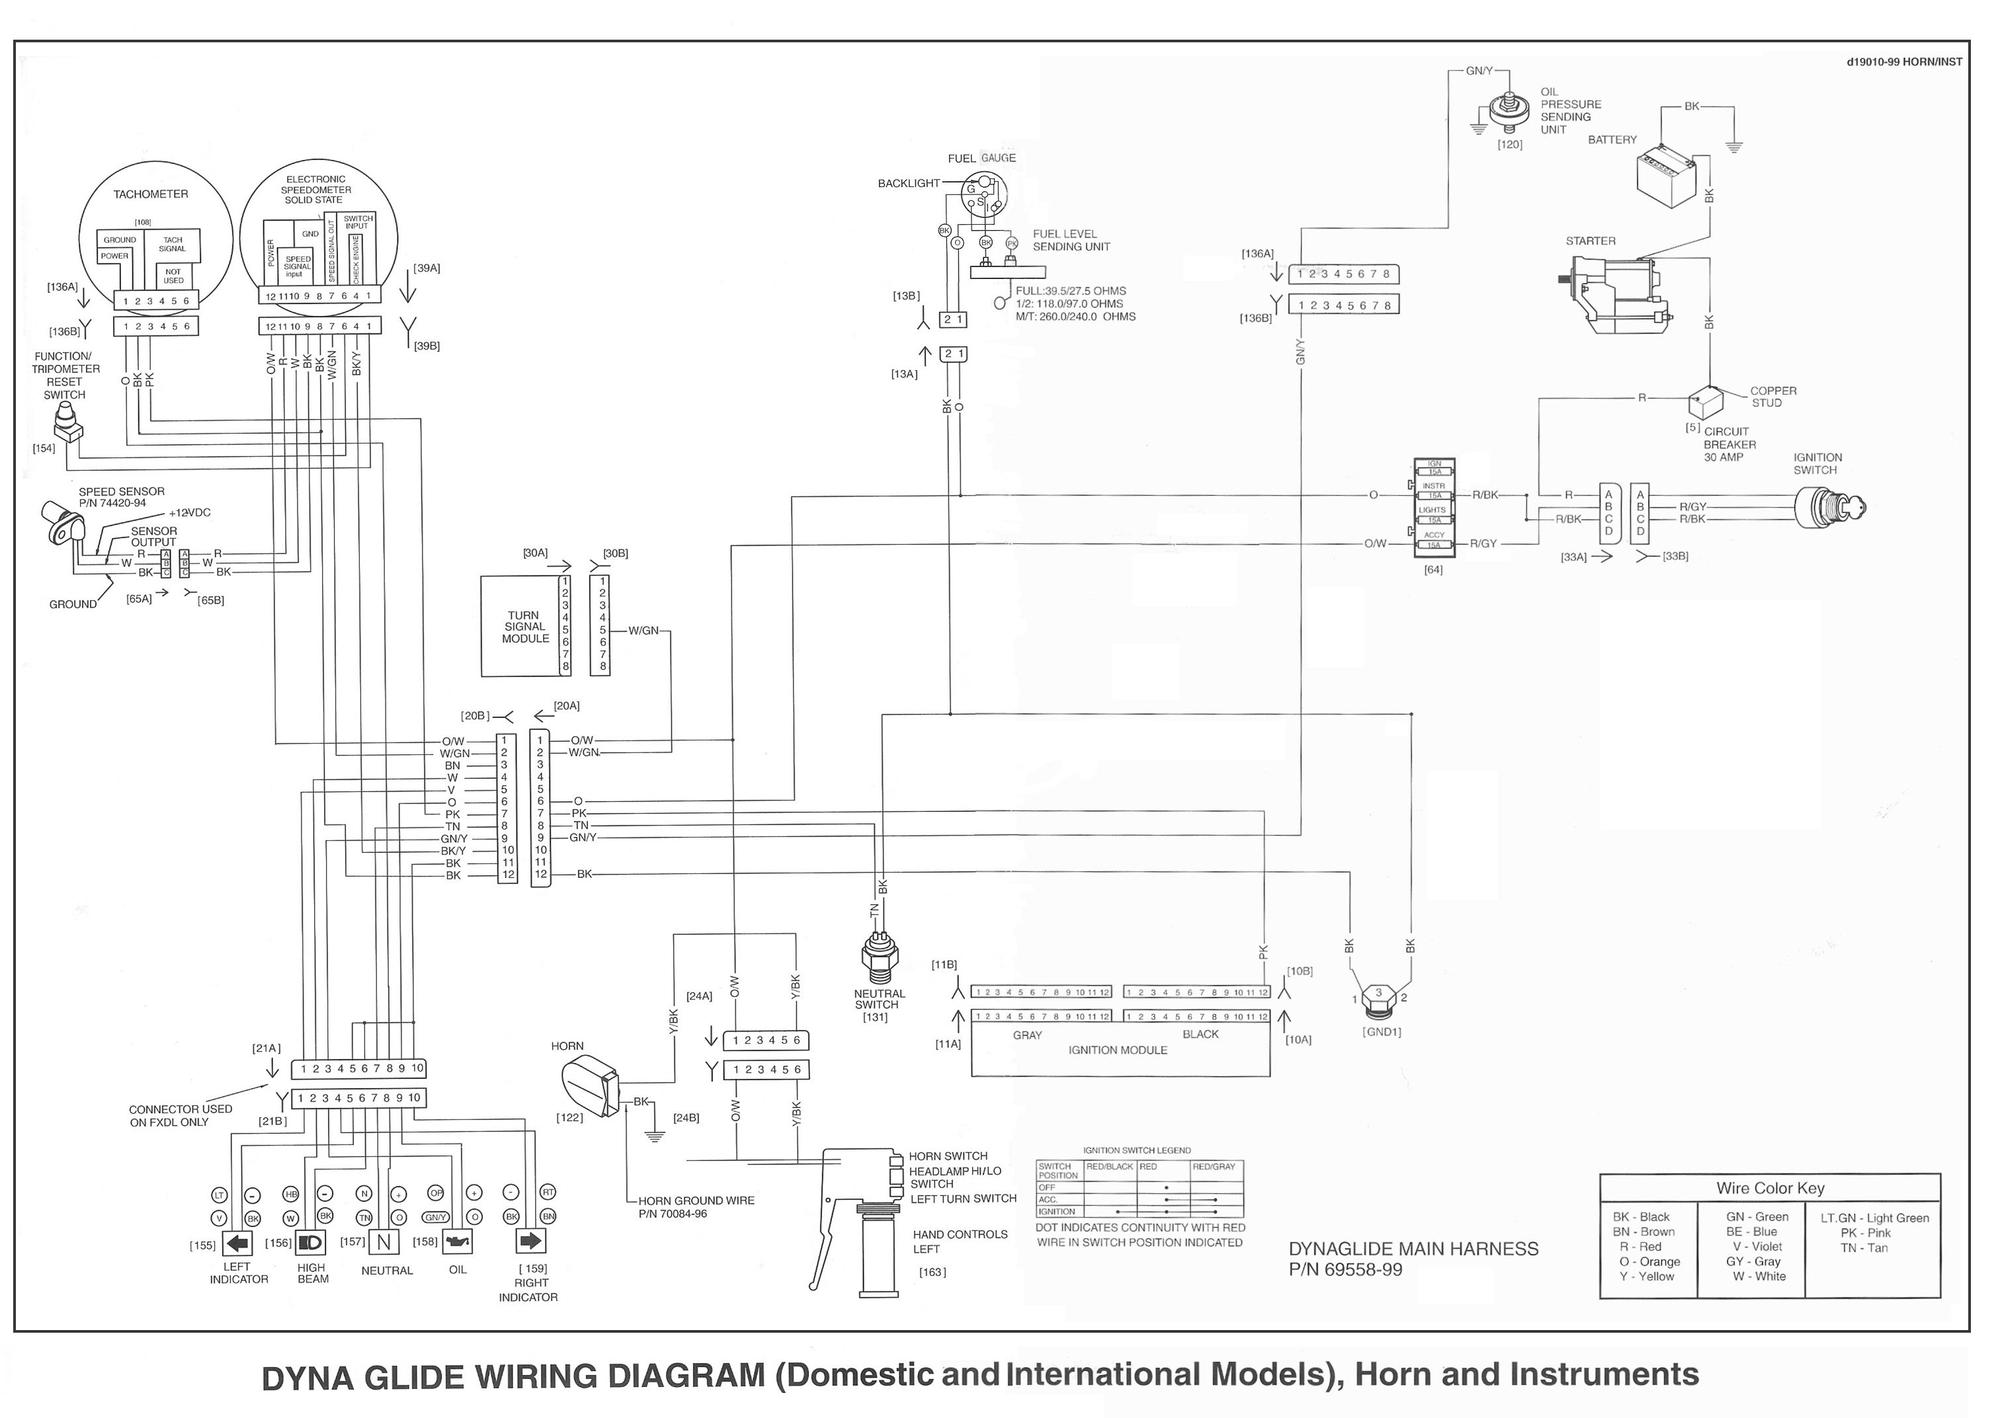 Diagram Dish Work Hd Wiring Diagram Picture Full Version Hd Quality Diagram Picture Securewiring1 Informagiovanilerici It